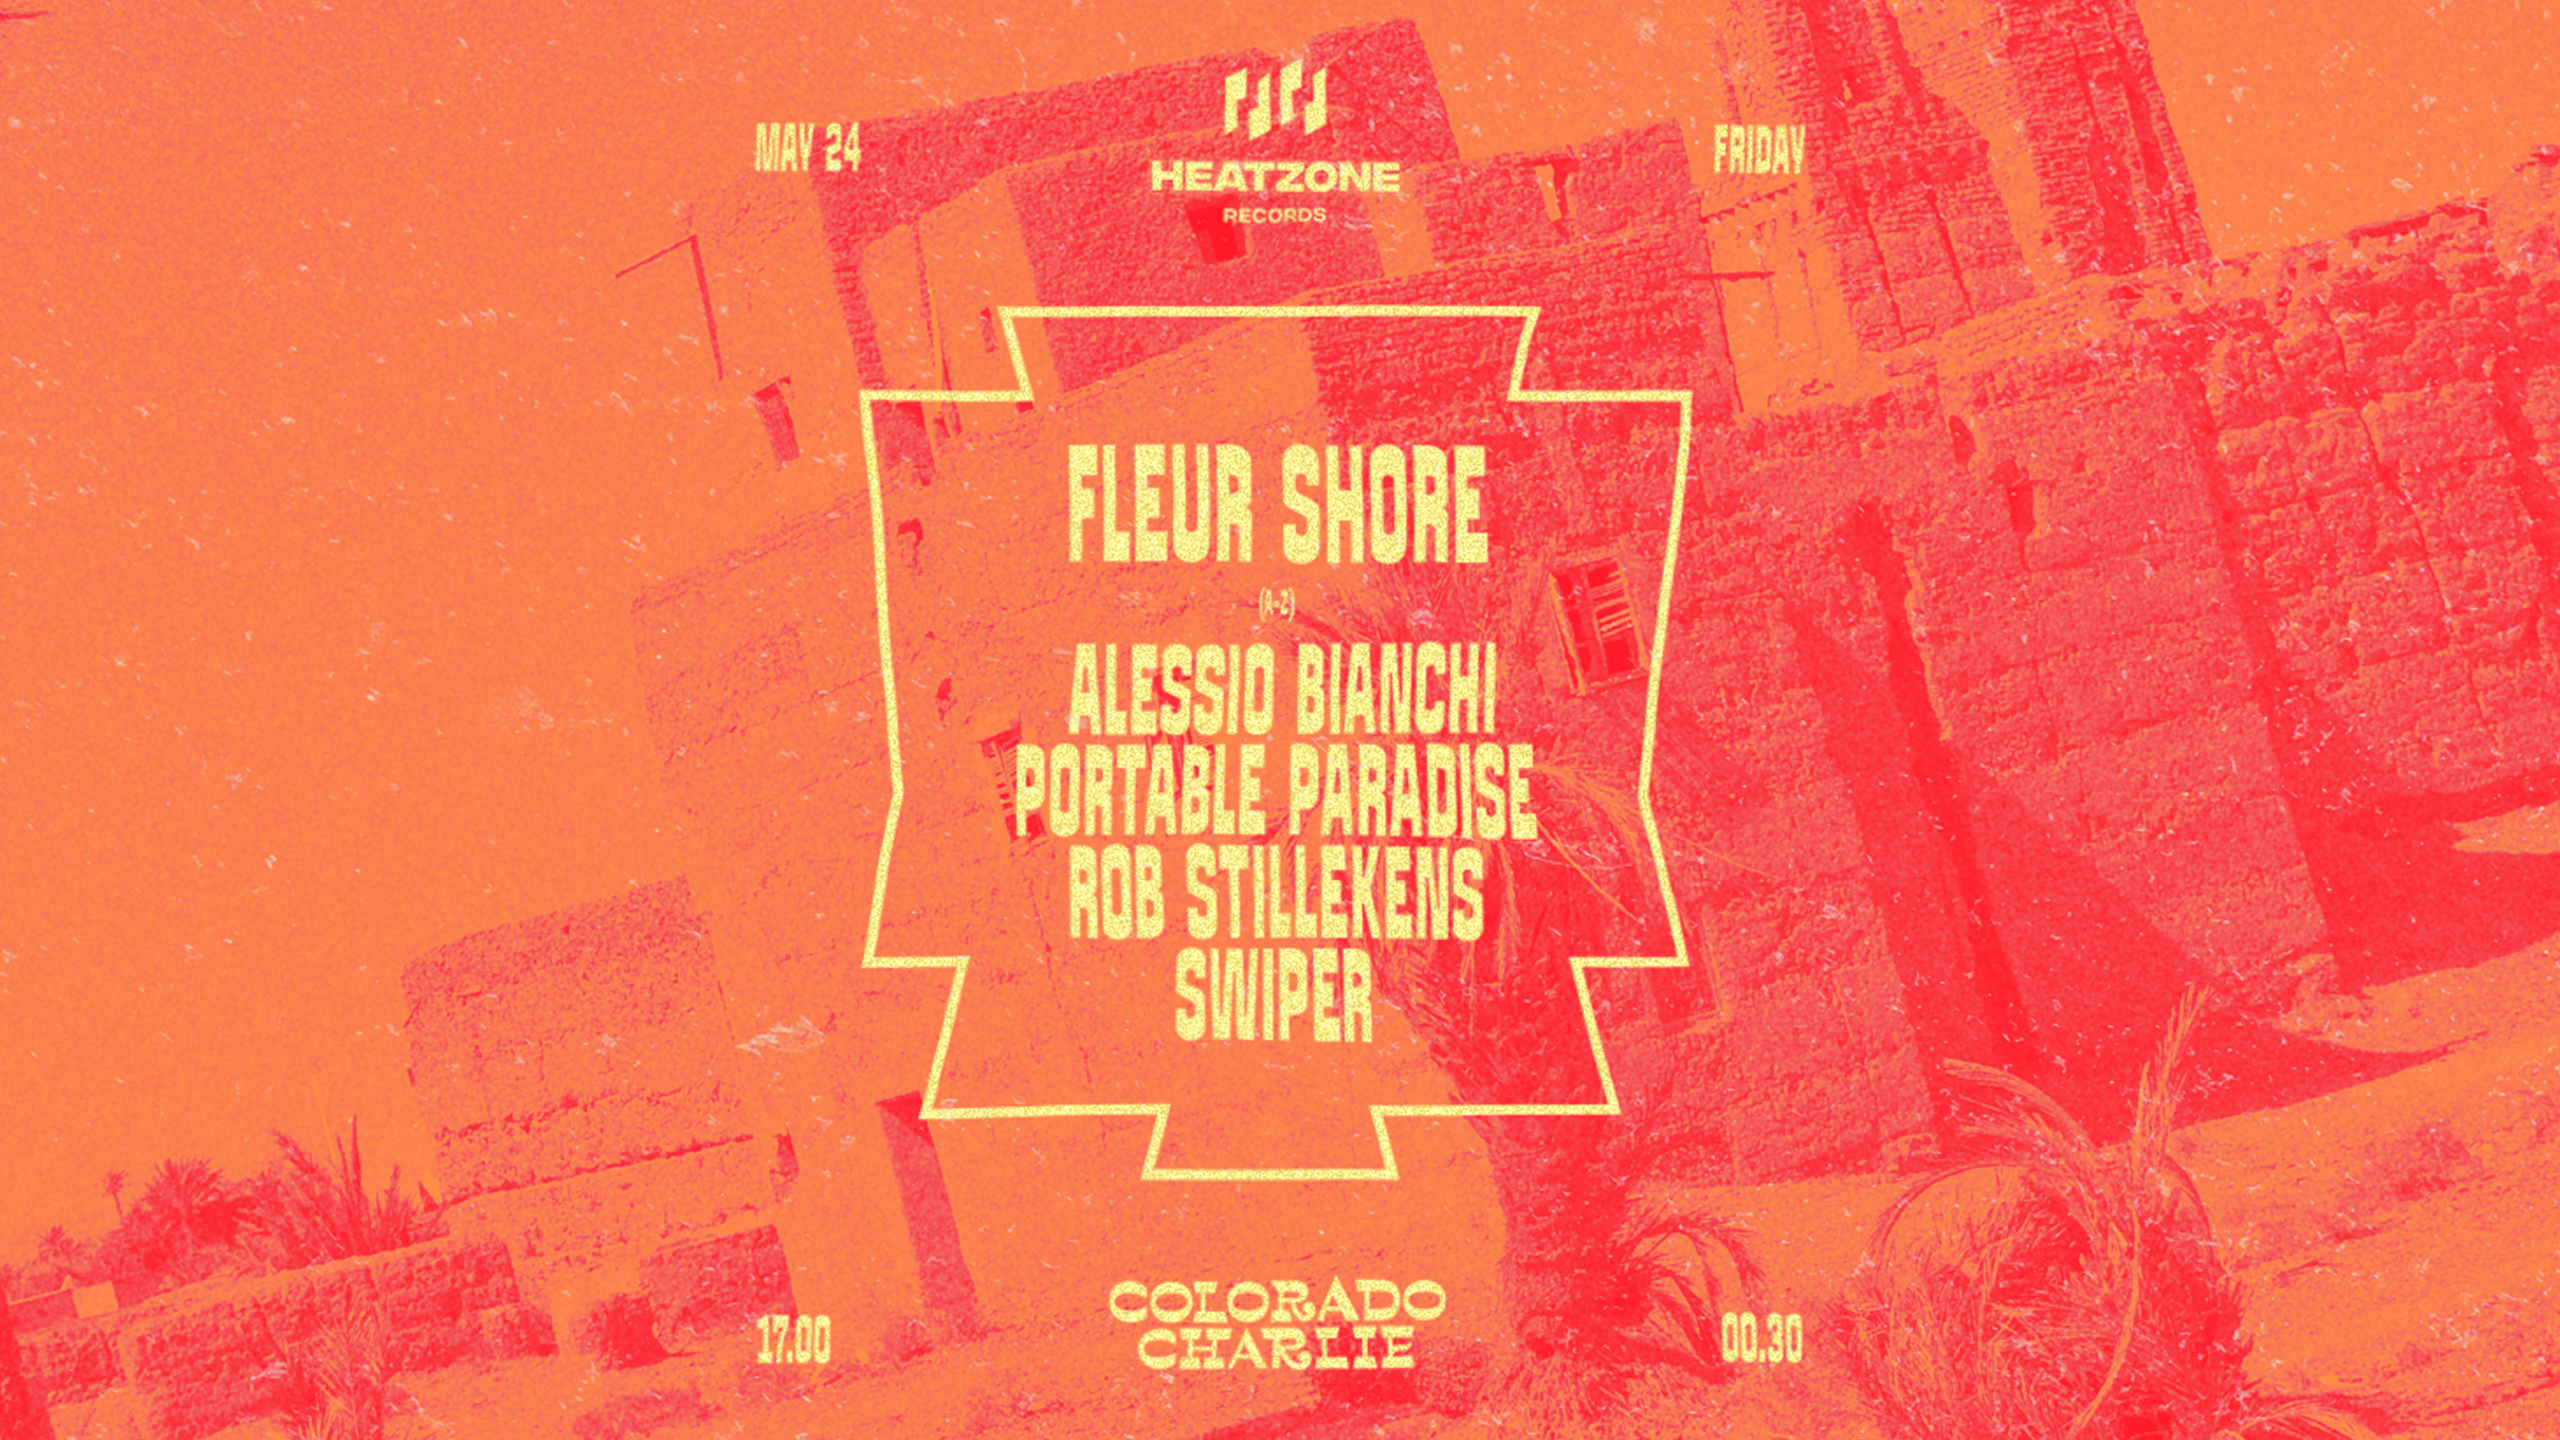 Colorado Charlie x Heatzone with Fleur Shore, Alessio Bianchi, Portable Paradise - フライヤー表